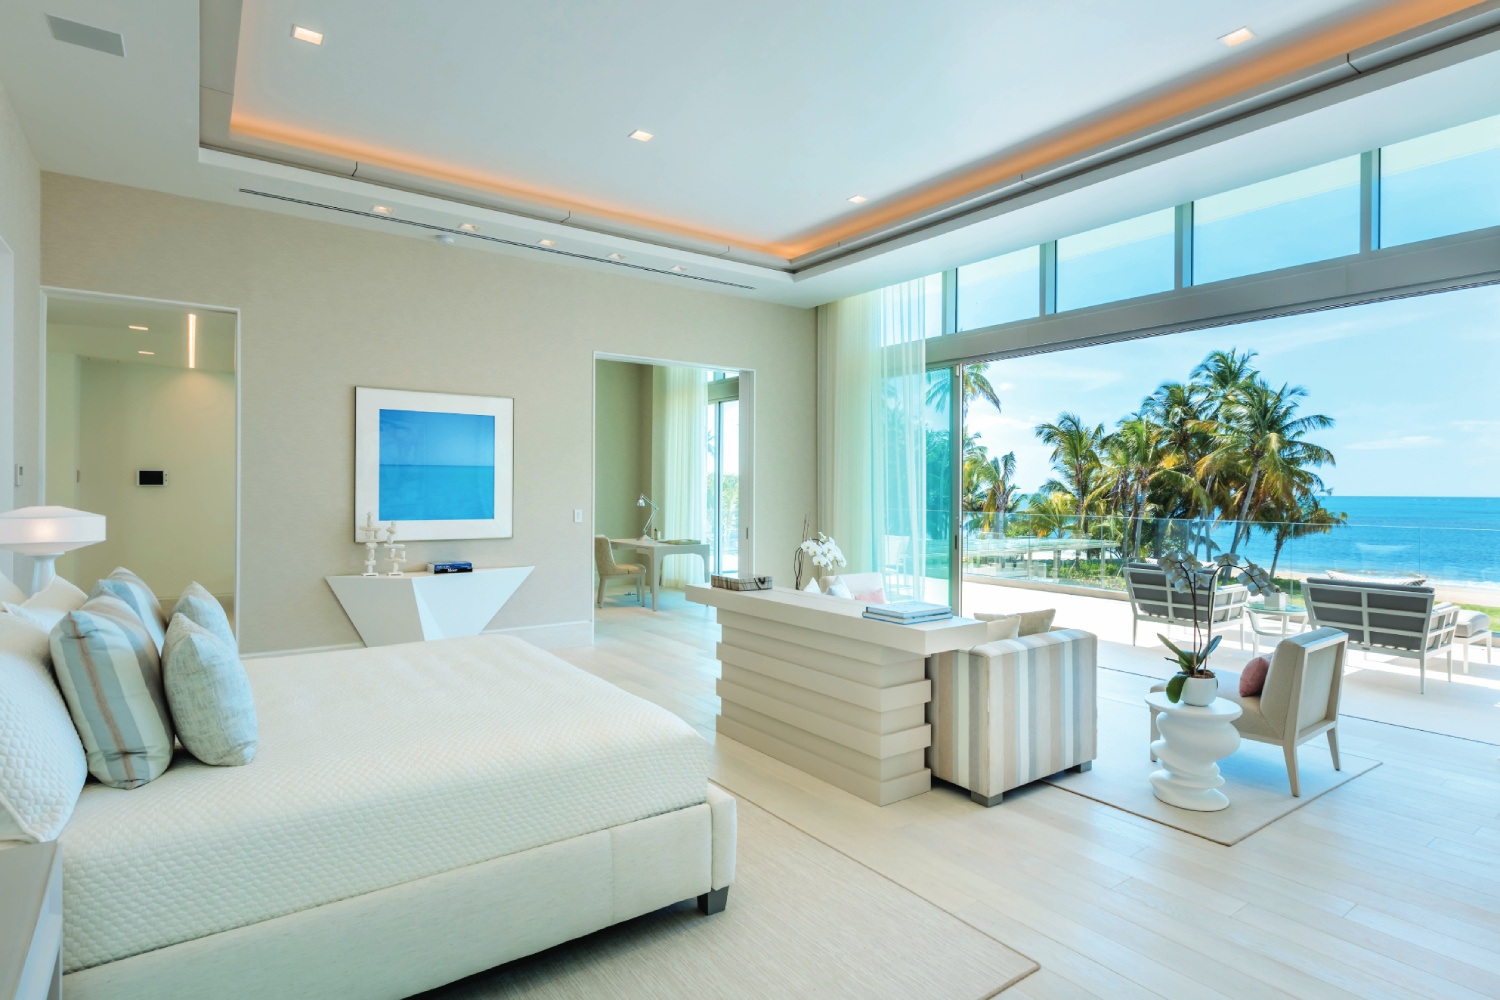 The Bedroom Suite at St. Regis Bahia Beach Casa Estancias